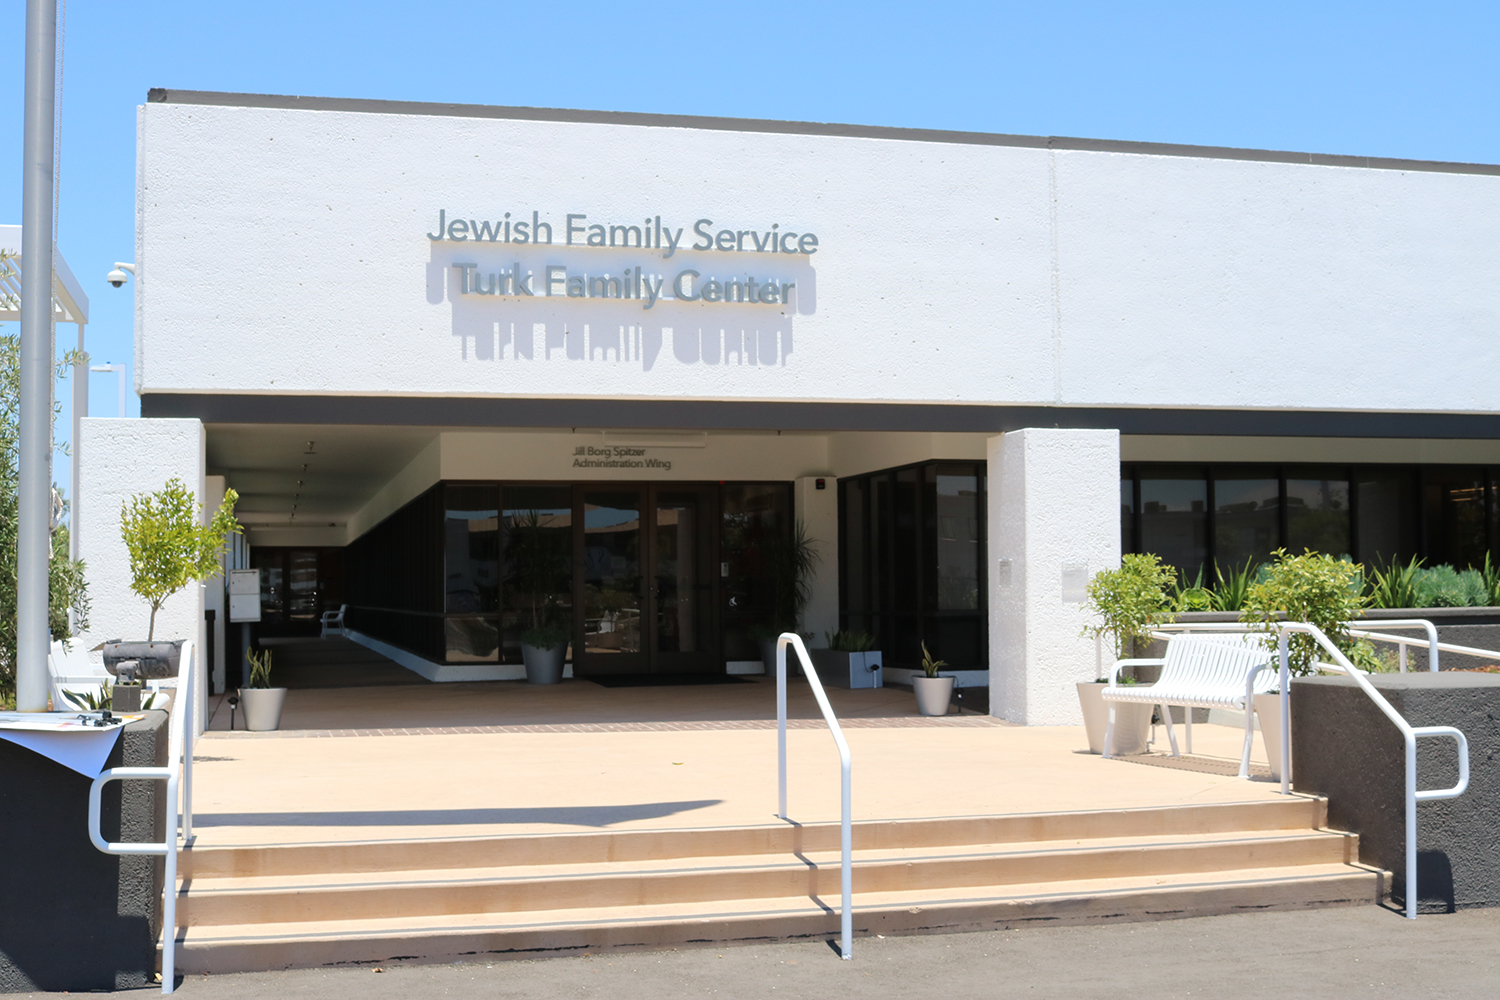 JFS Turk Family Center Building at 8804 Balboa Ave.